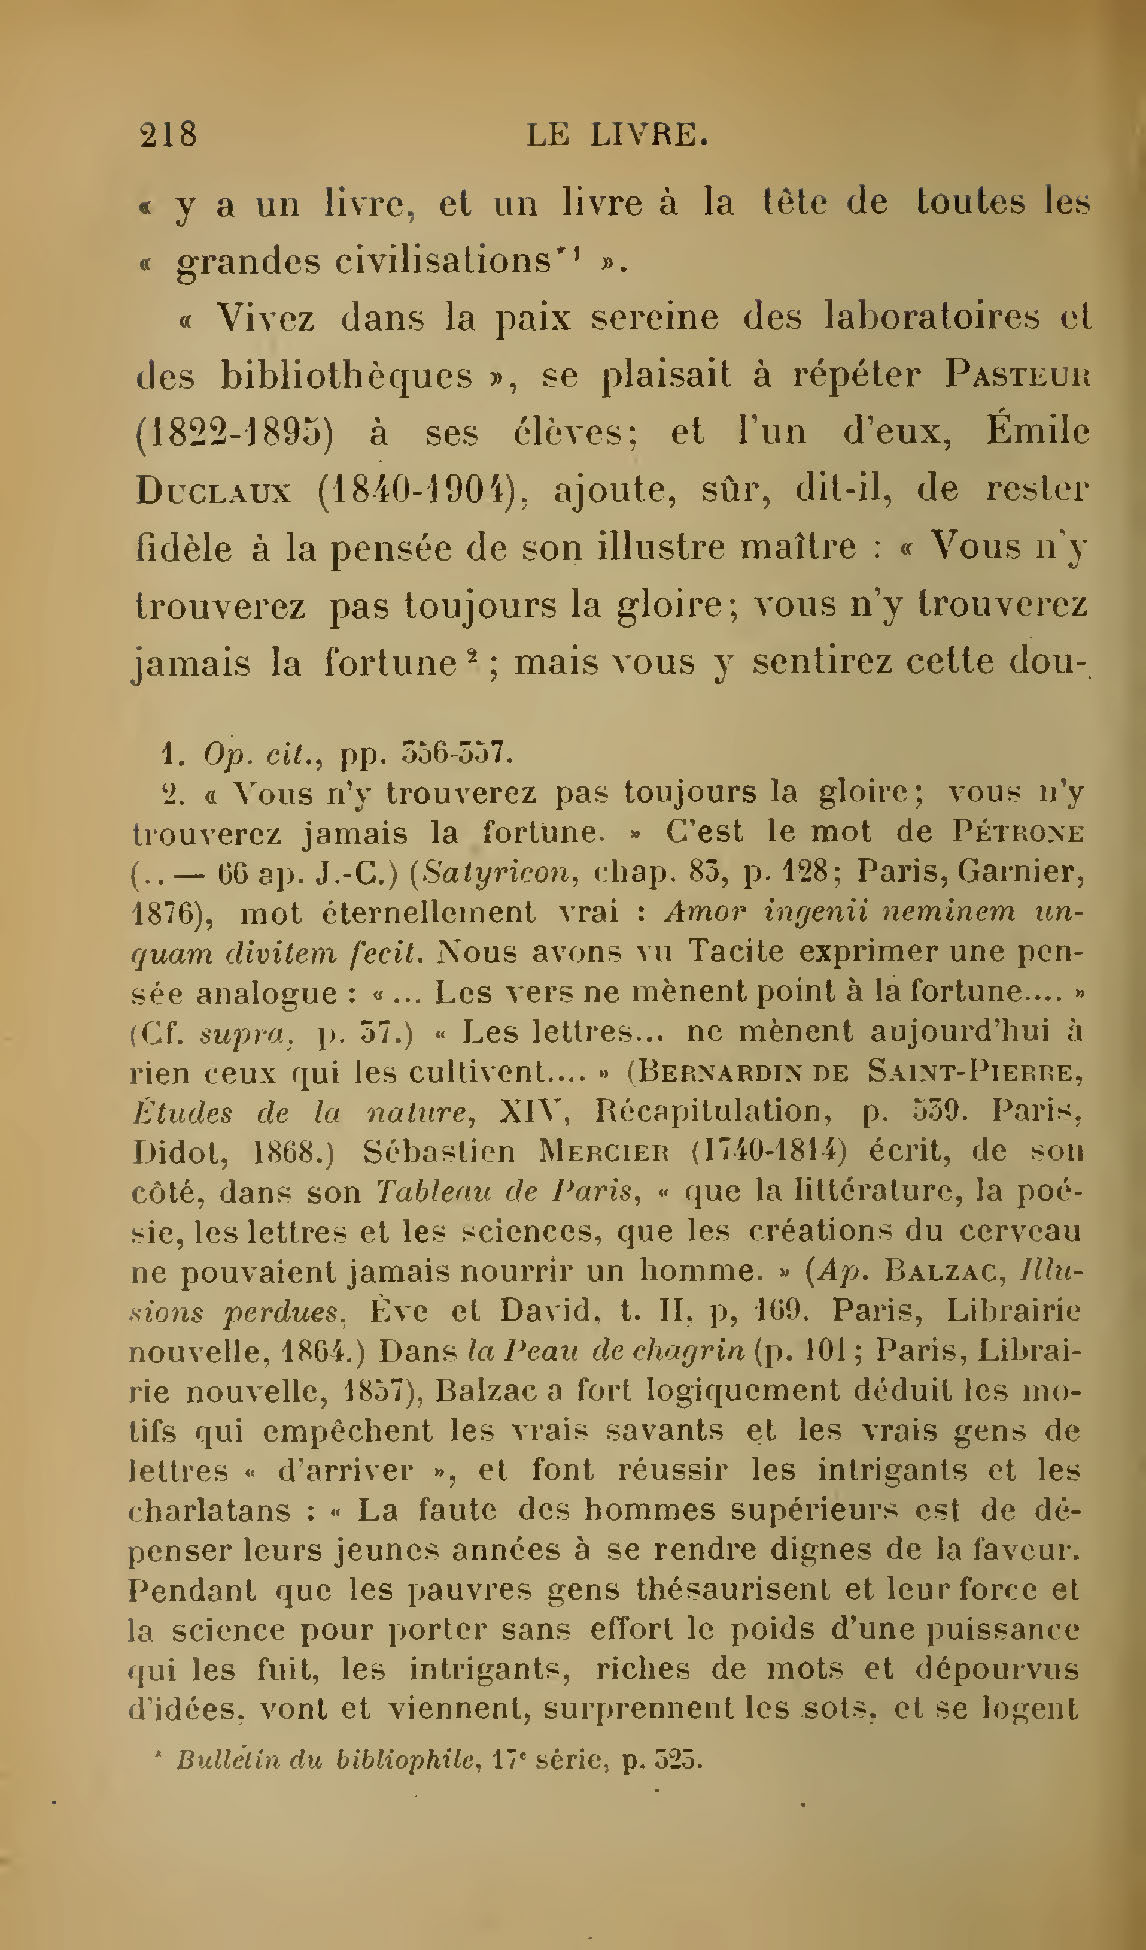 Albert Cim, Le Livre, t. I, p. 218.